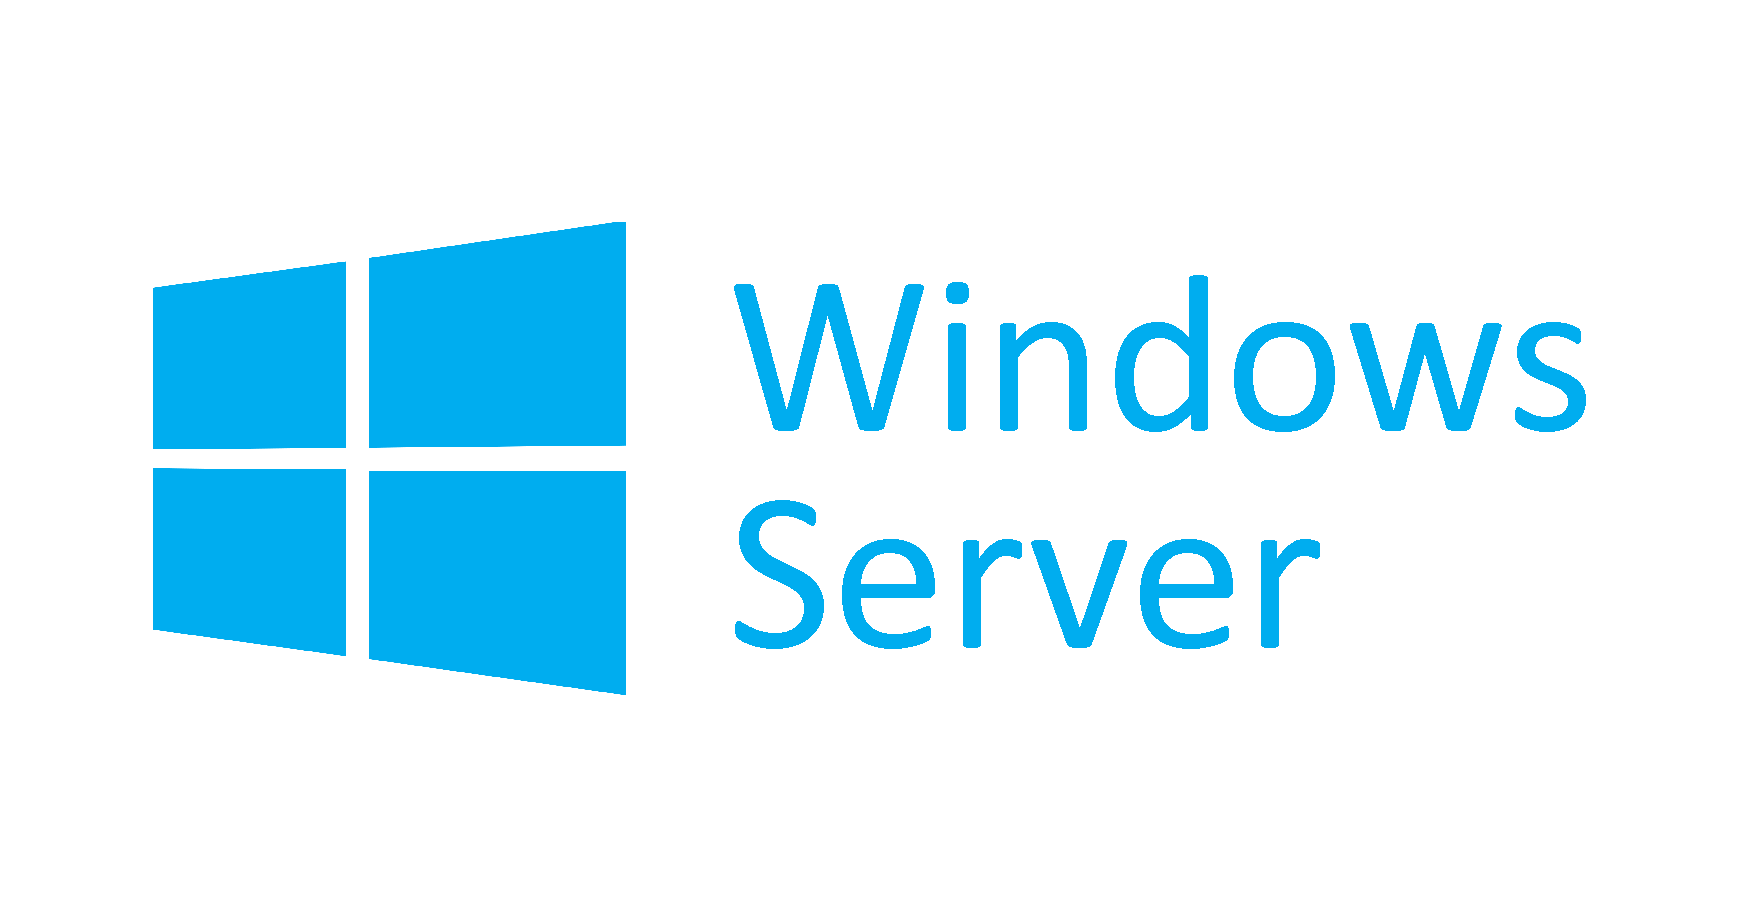 Microsoft Windows Server Logo - Microsoft Risc&259 S&259 Bu&537easc&259 &537i Windows Server Prin ...